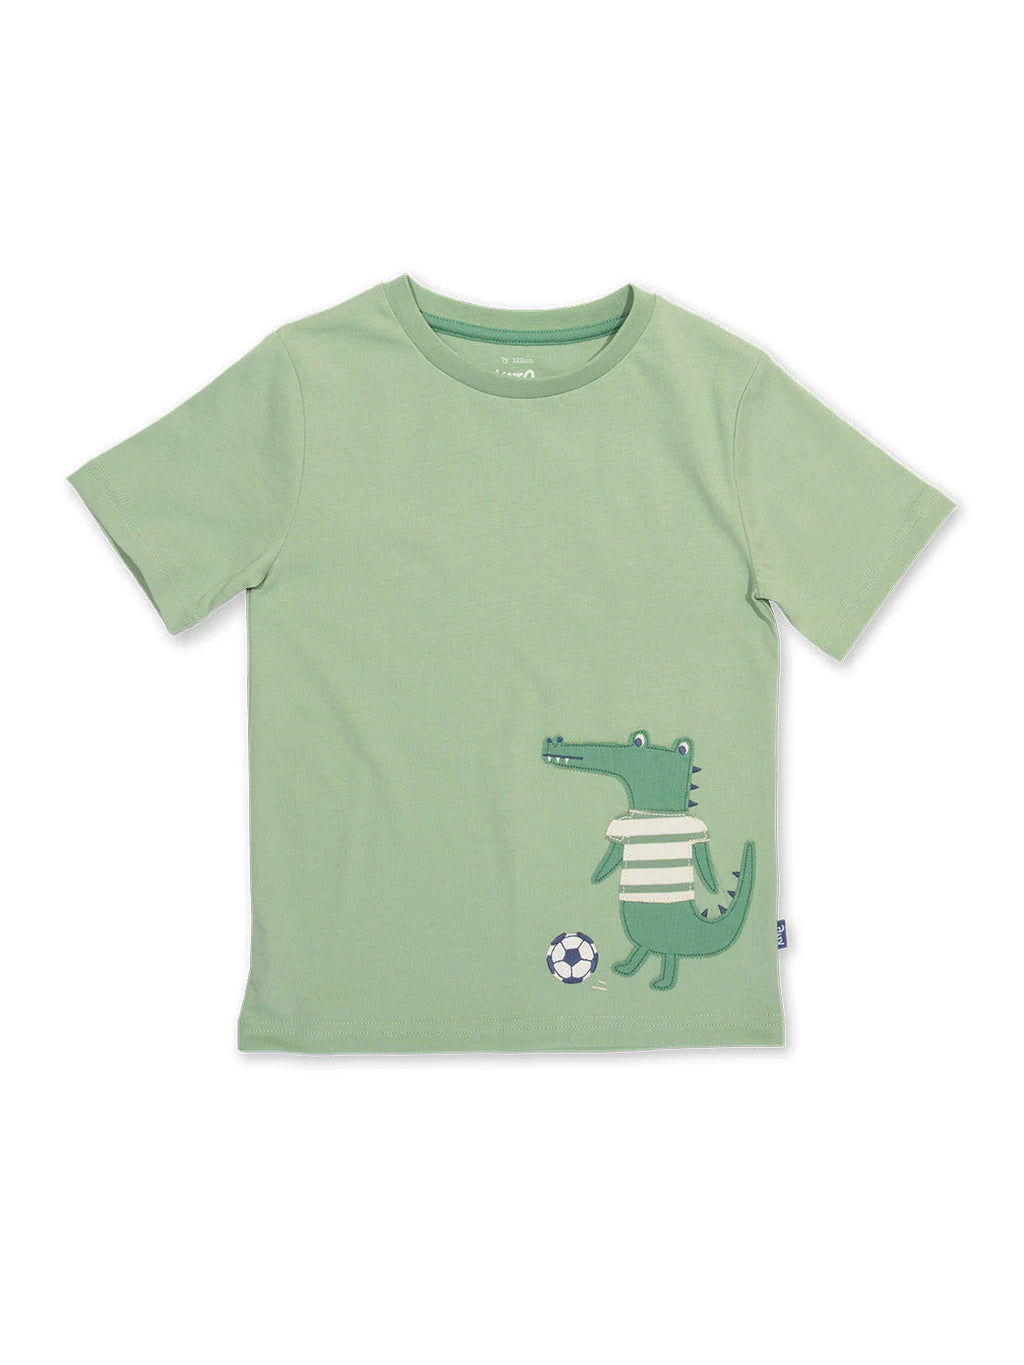 Kite Clothing Boys Snappy Tackle Football Green T-shirt | New Season | SALE